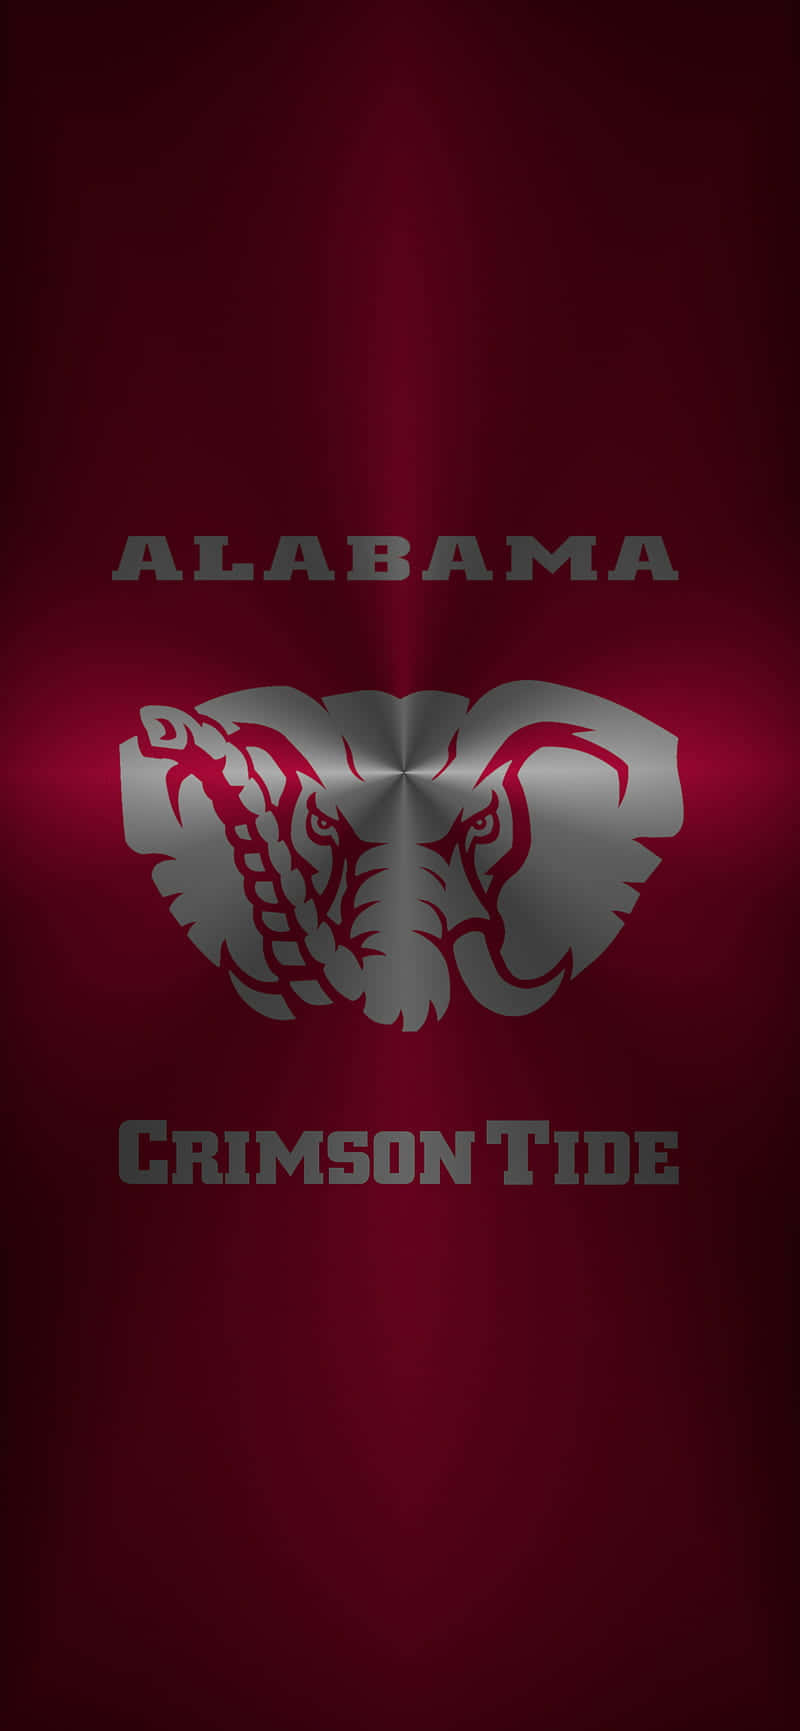 Logodegli Alabama Crimson Tide - Sfondo Per Computer O Mobile Sfondo